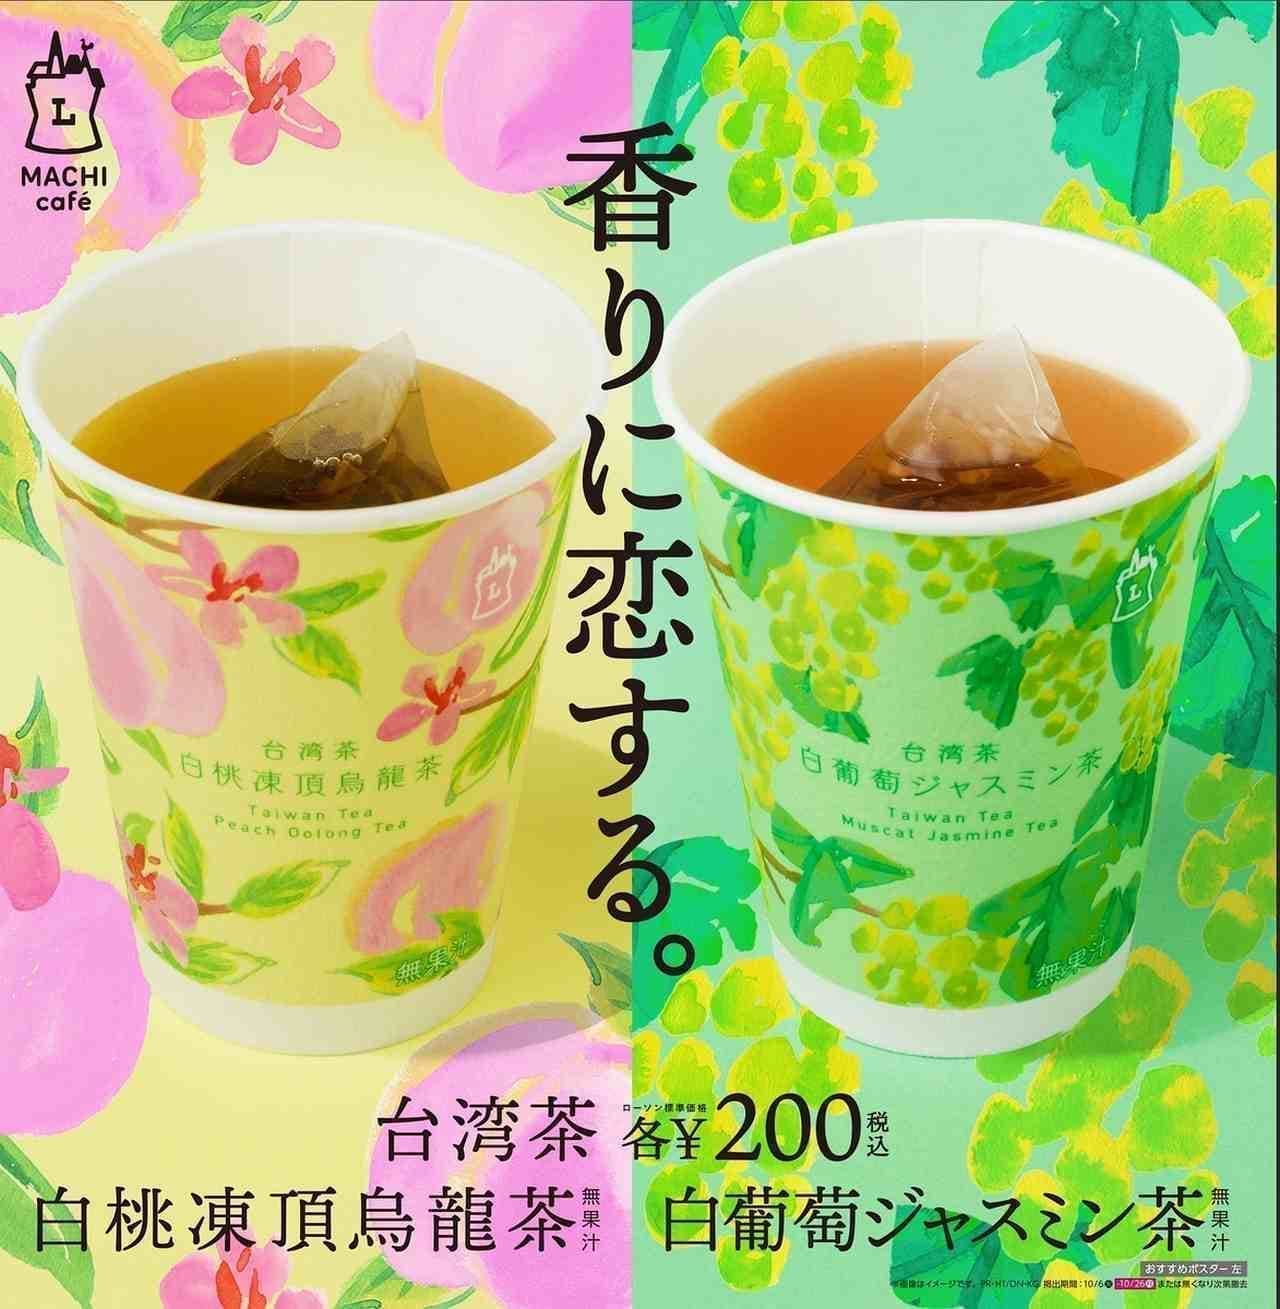 Lawson "MACHI cafe Taiwanese tea white peach frozen top crow dragon tea (no fruit juice)" and "MACHI cafe Taiwanese tea white grape jasmine tea (no fruit juice)"